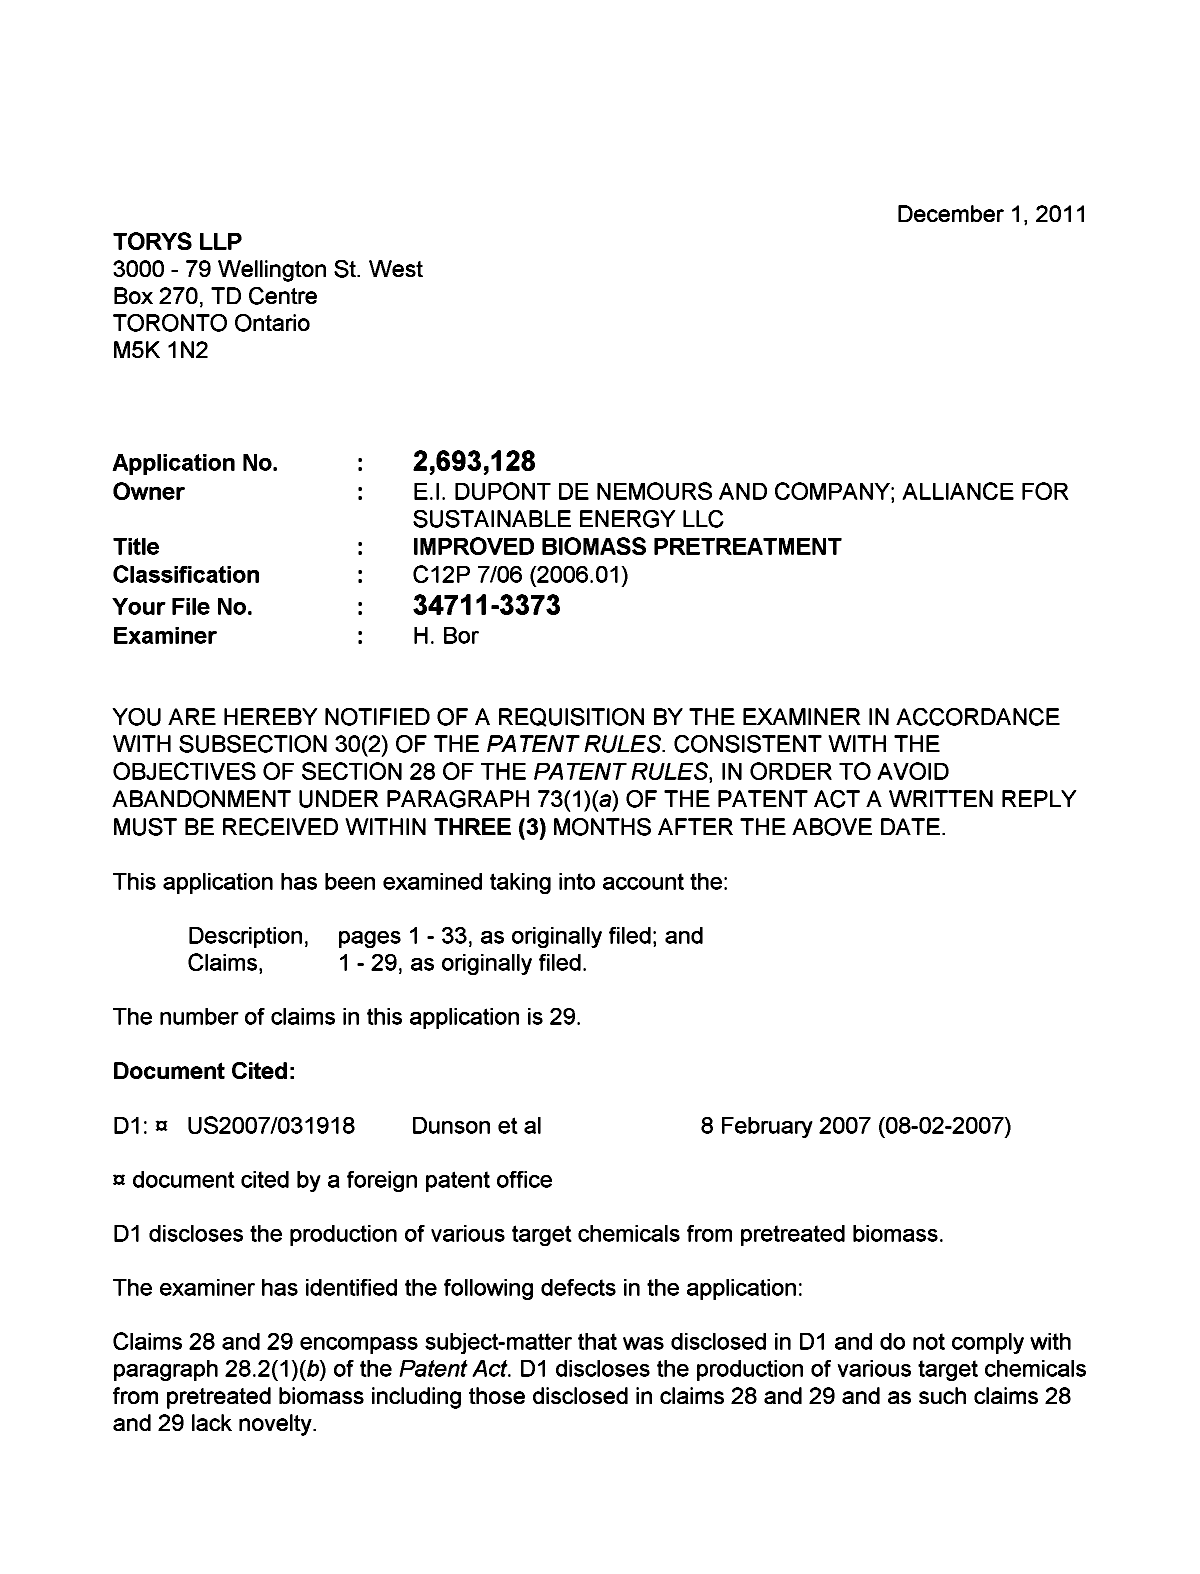 Canadian Patent Document 2693128. Prosecution-Amendment 20101201. Image 1 of 2